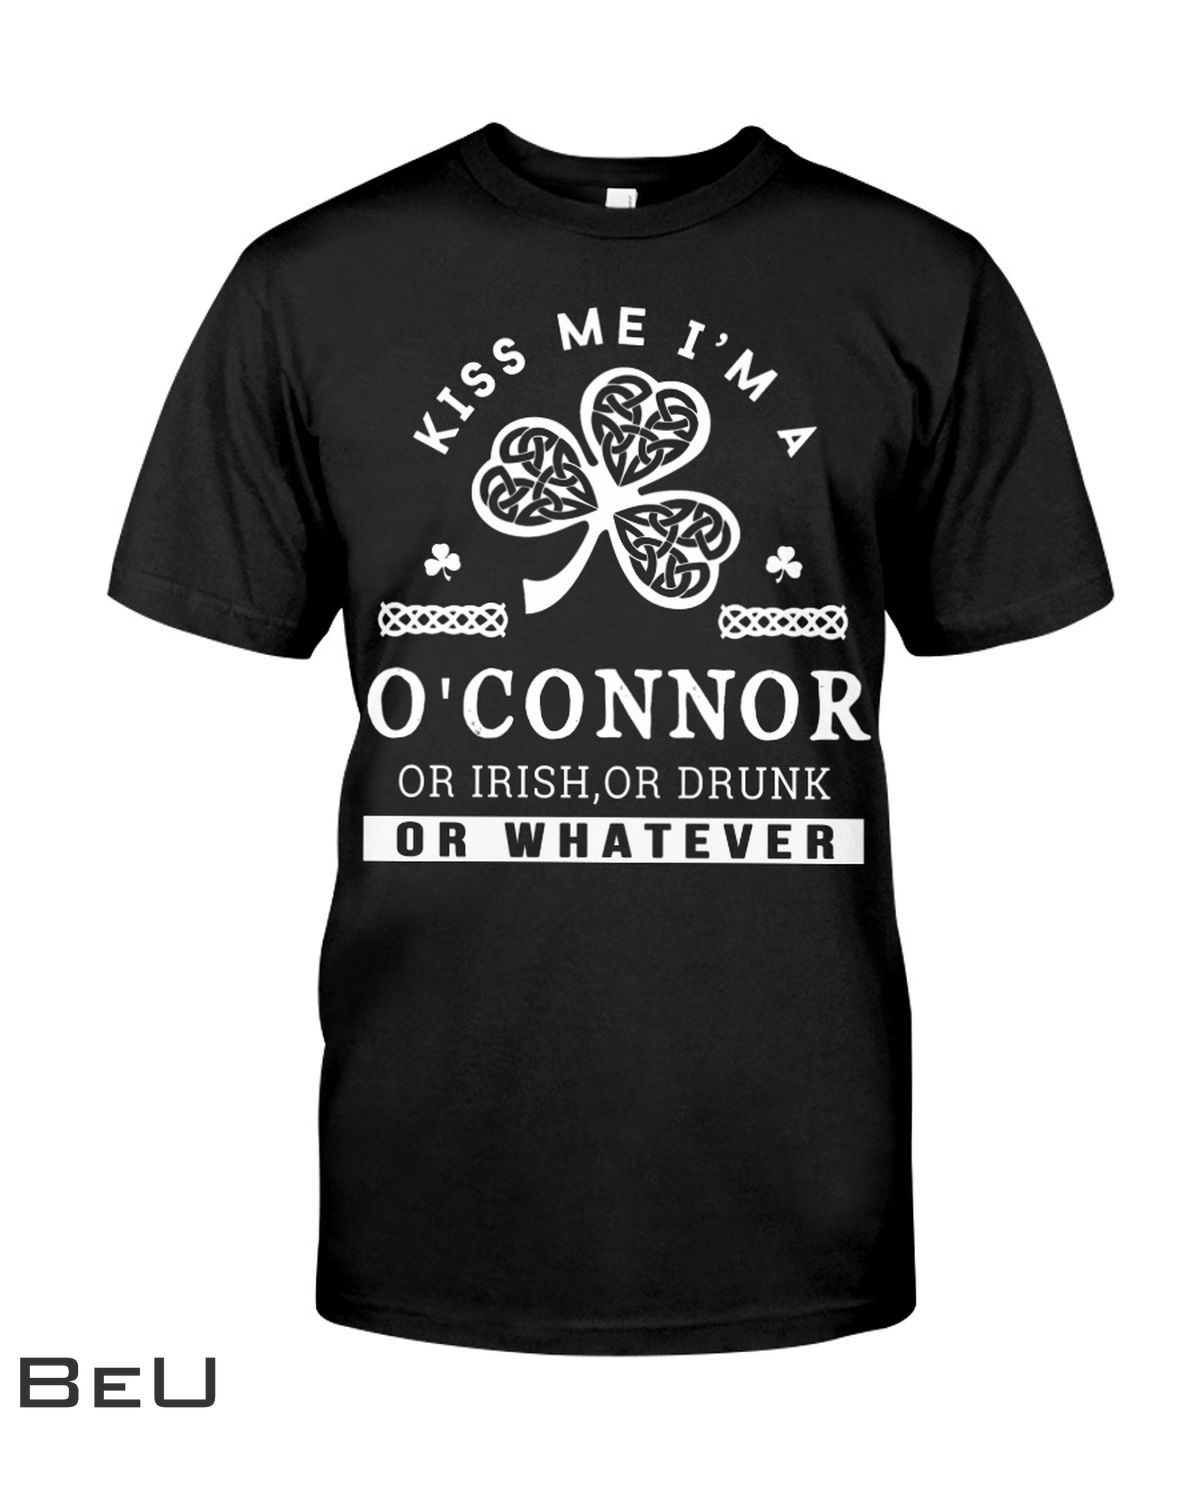 Uk Kiss Me I'm O'connor Or Irish Or Drink Shirt